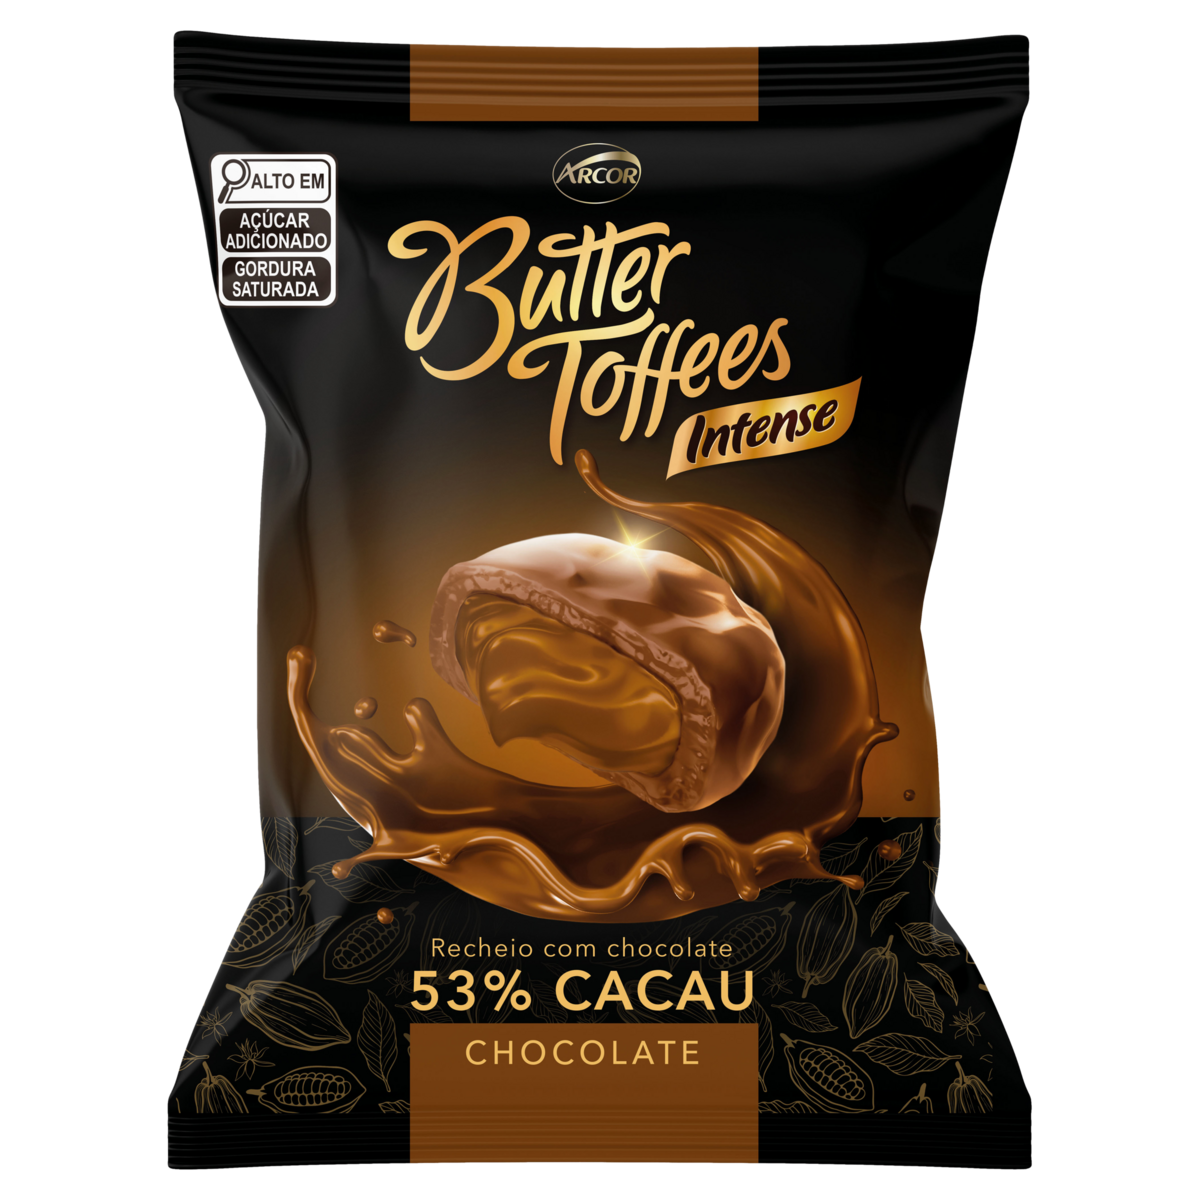 7891118026319 - BALA CHOCOLATE RECHEIO CHOCOLATE 53% CACAU BUTTER TOFFEES INTENSE PACOTE 90G